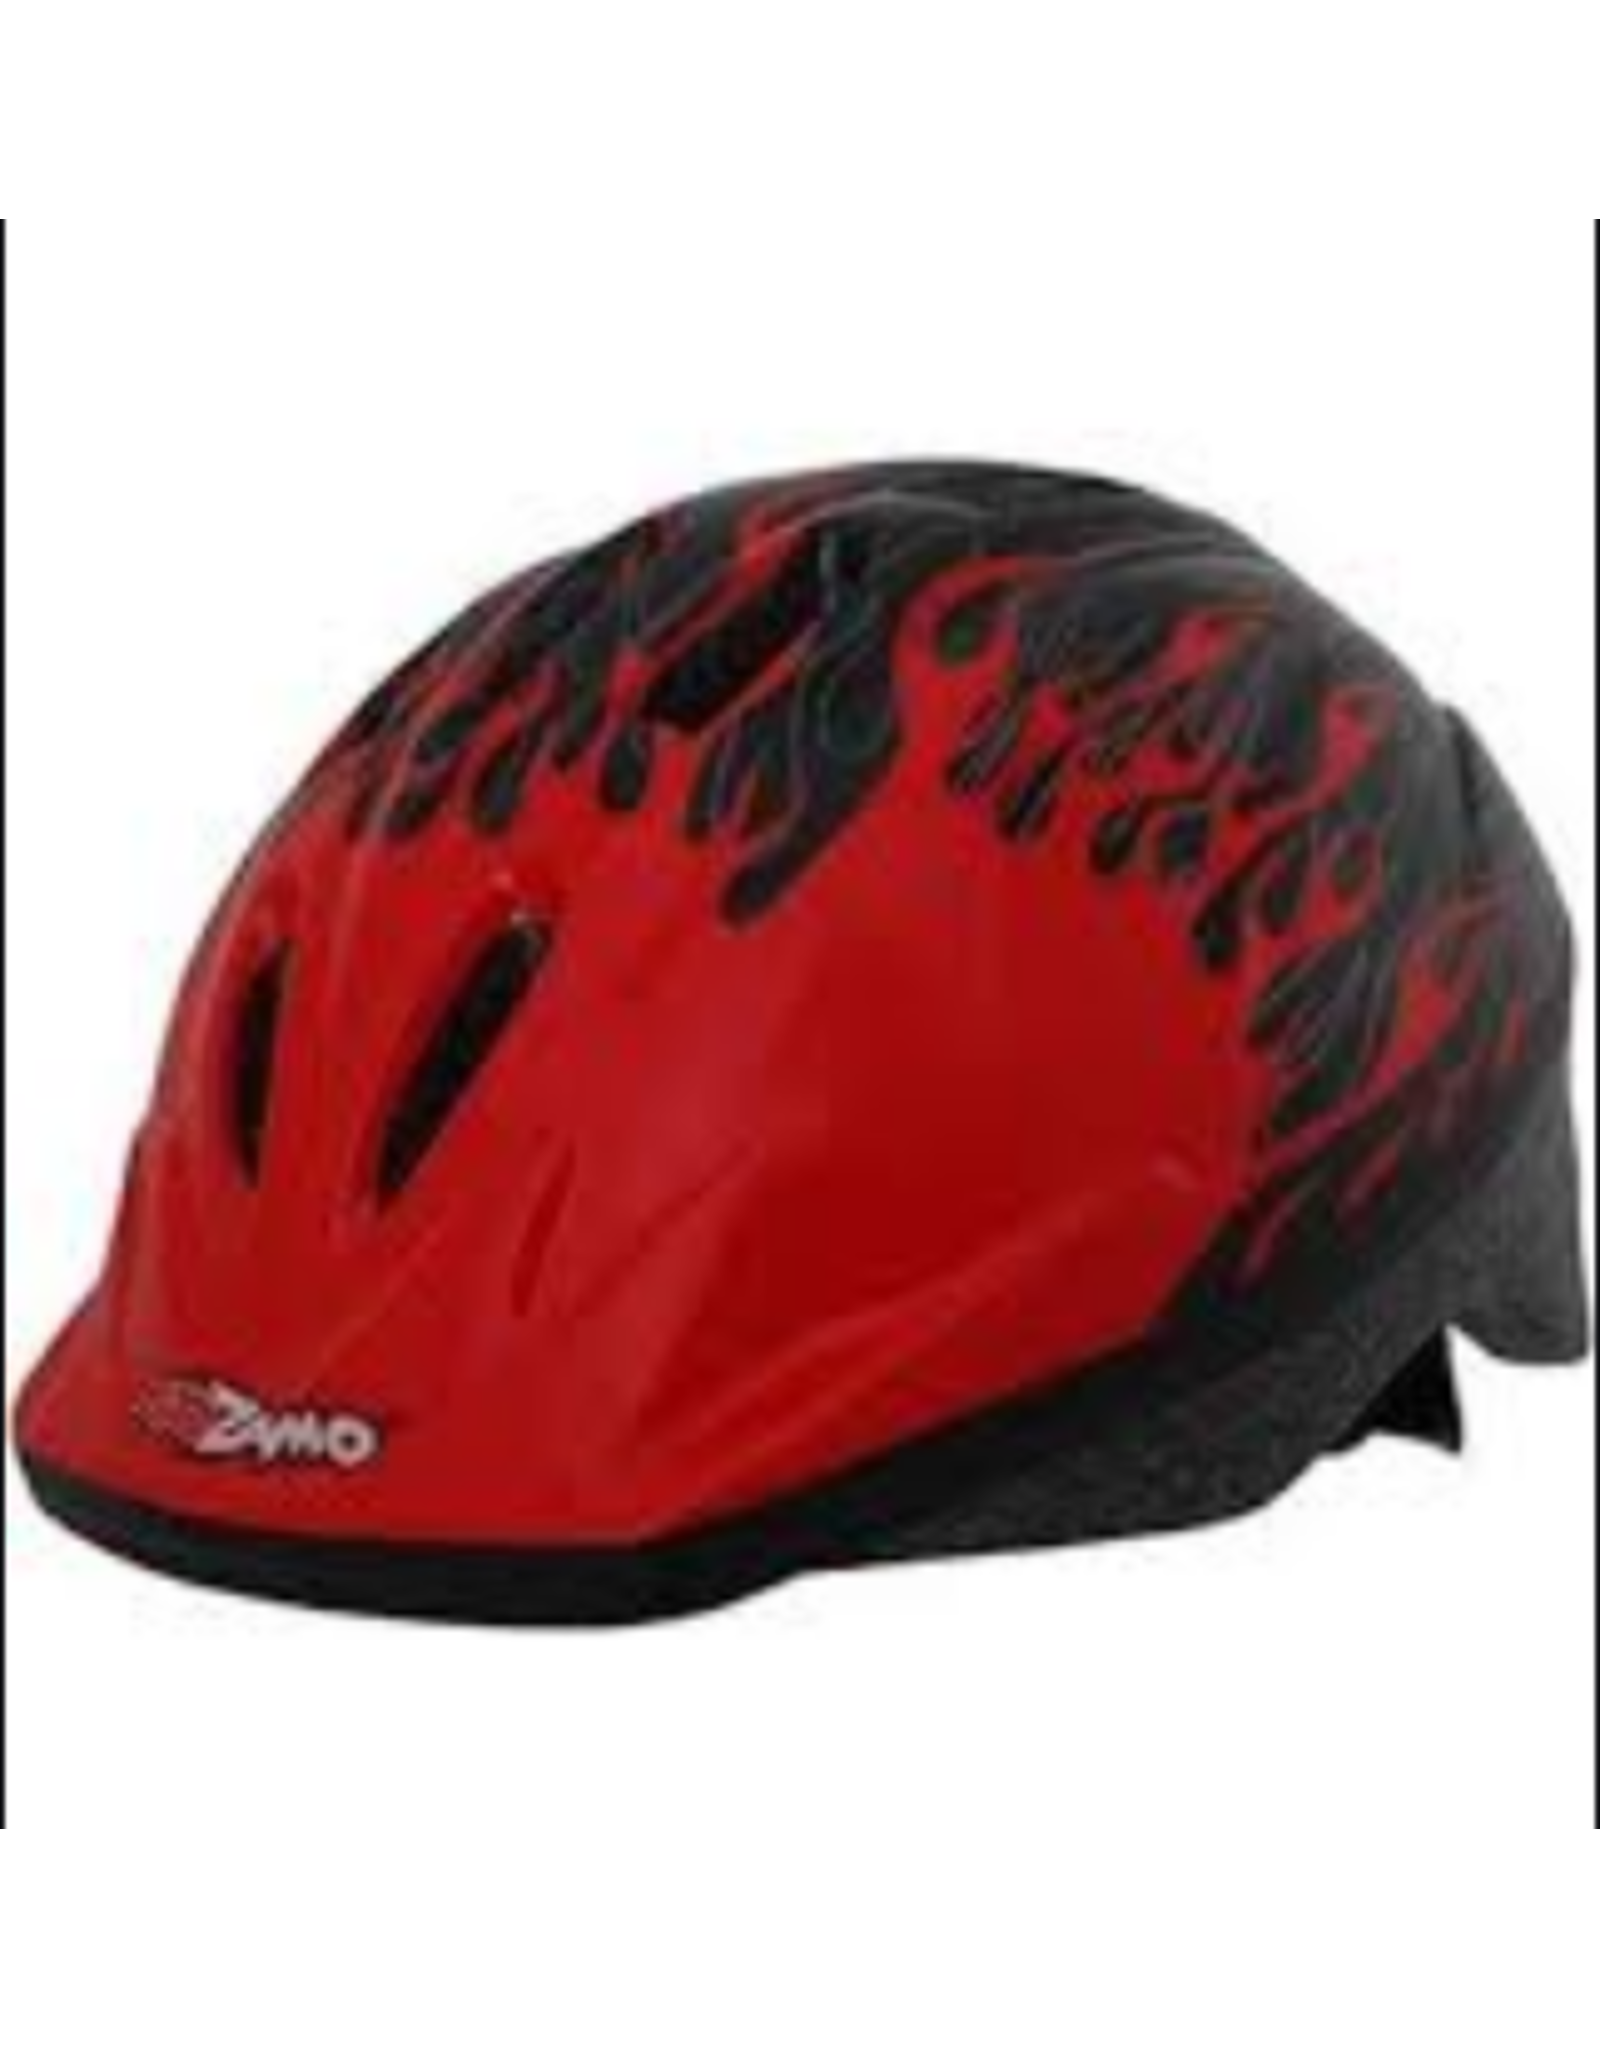 J & B Importers Kidzamo Helmet - Red/Black Flame, Small/Medium